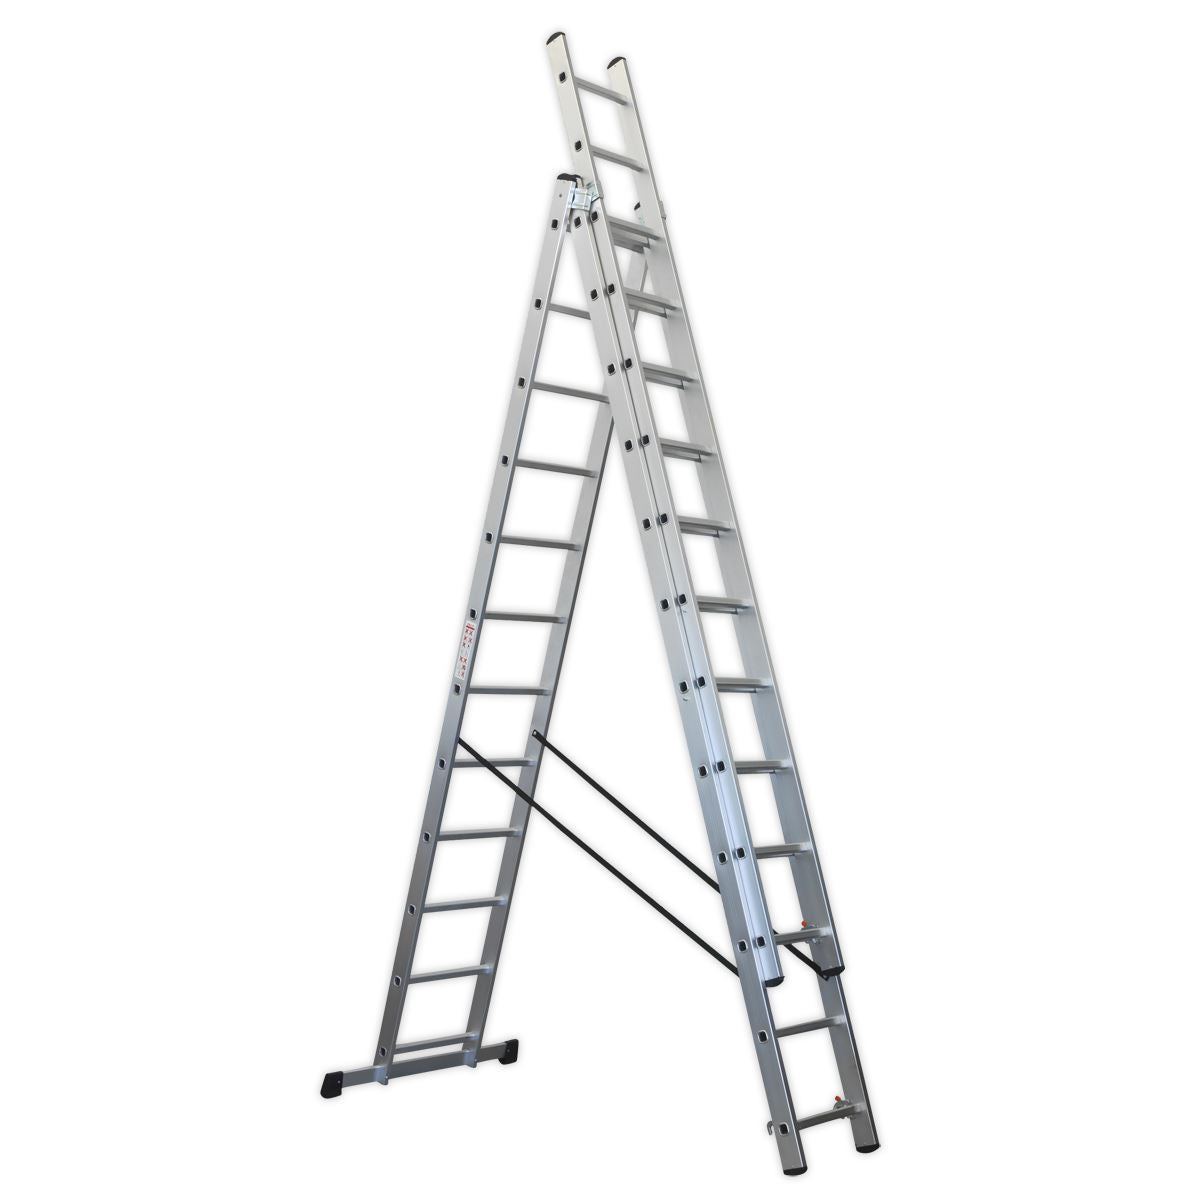 Sealey Aluminium Extension Combination Ladder 3x12 EN 131